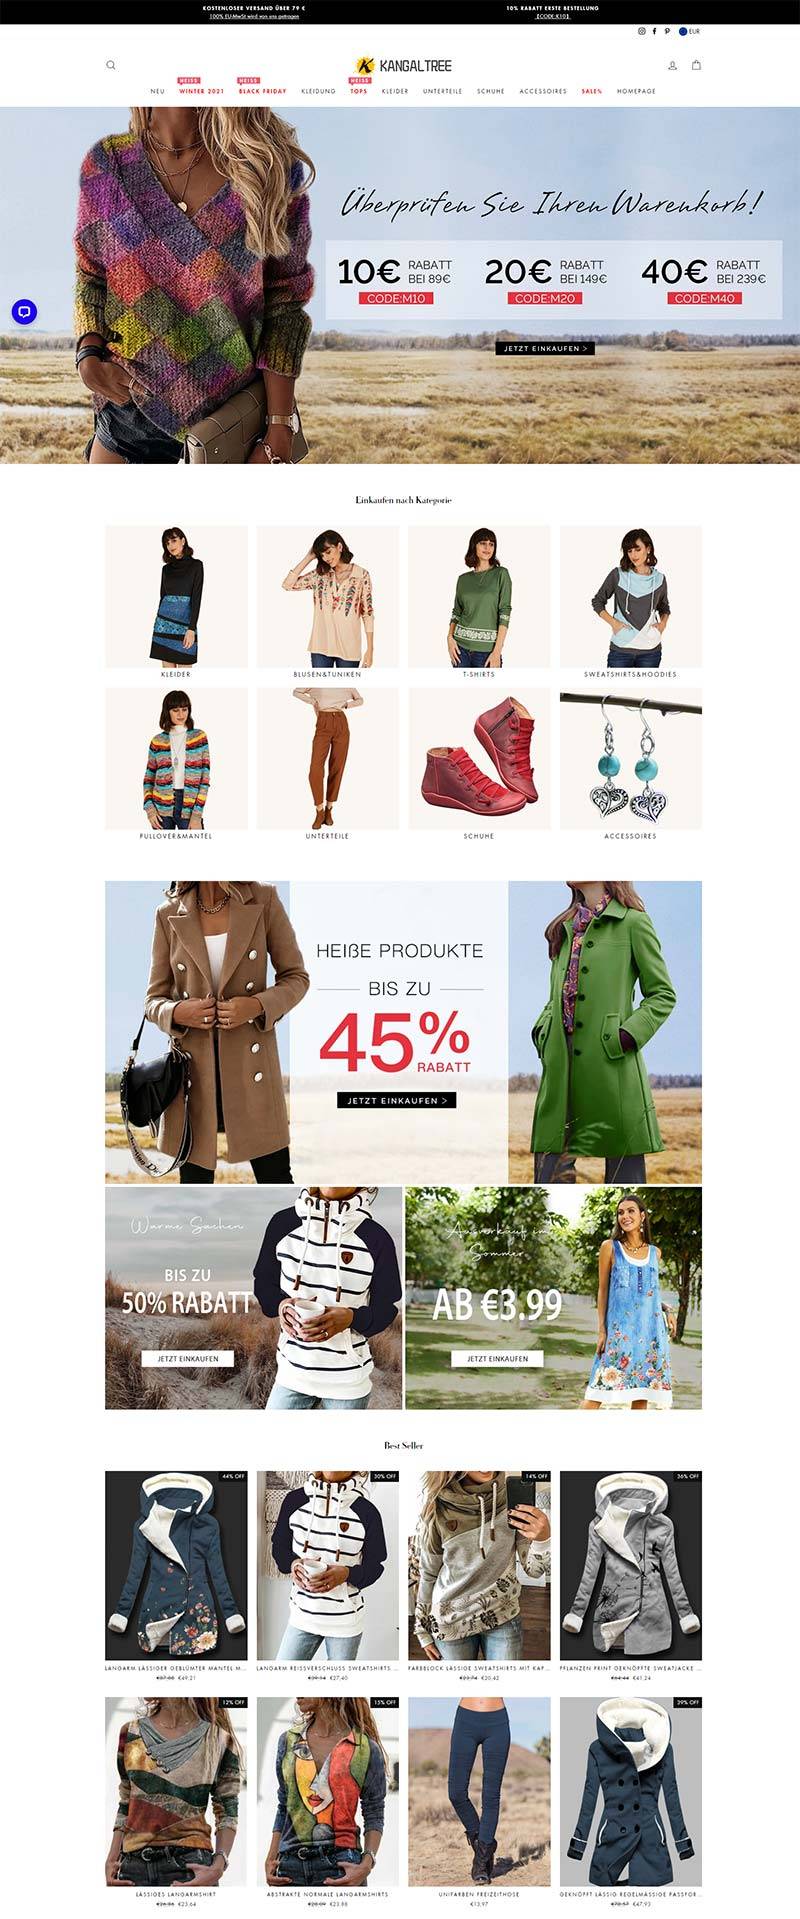 KANGAL TREE 德国时尚女装品牌购物网站